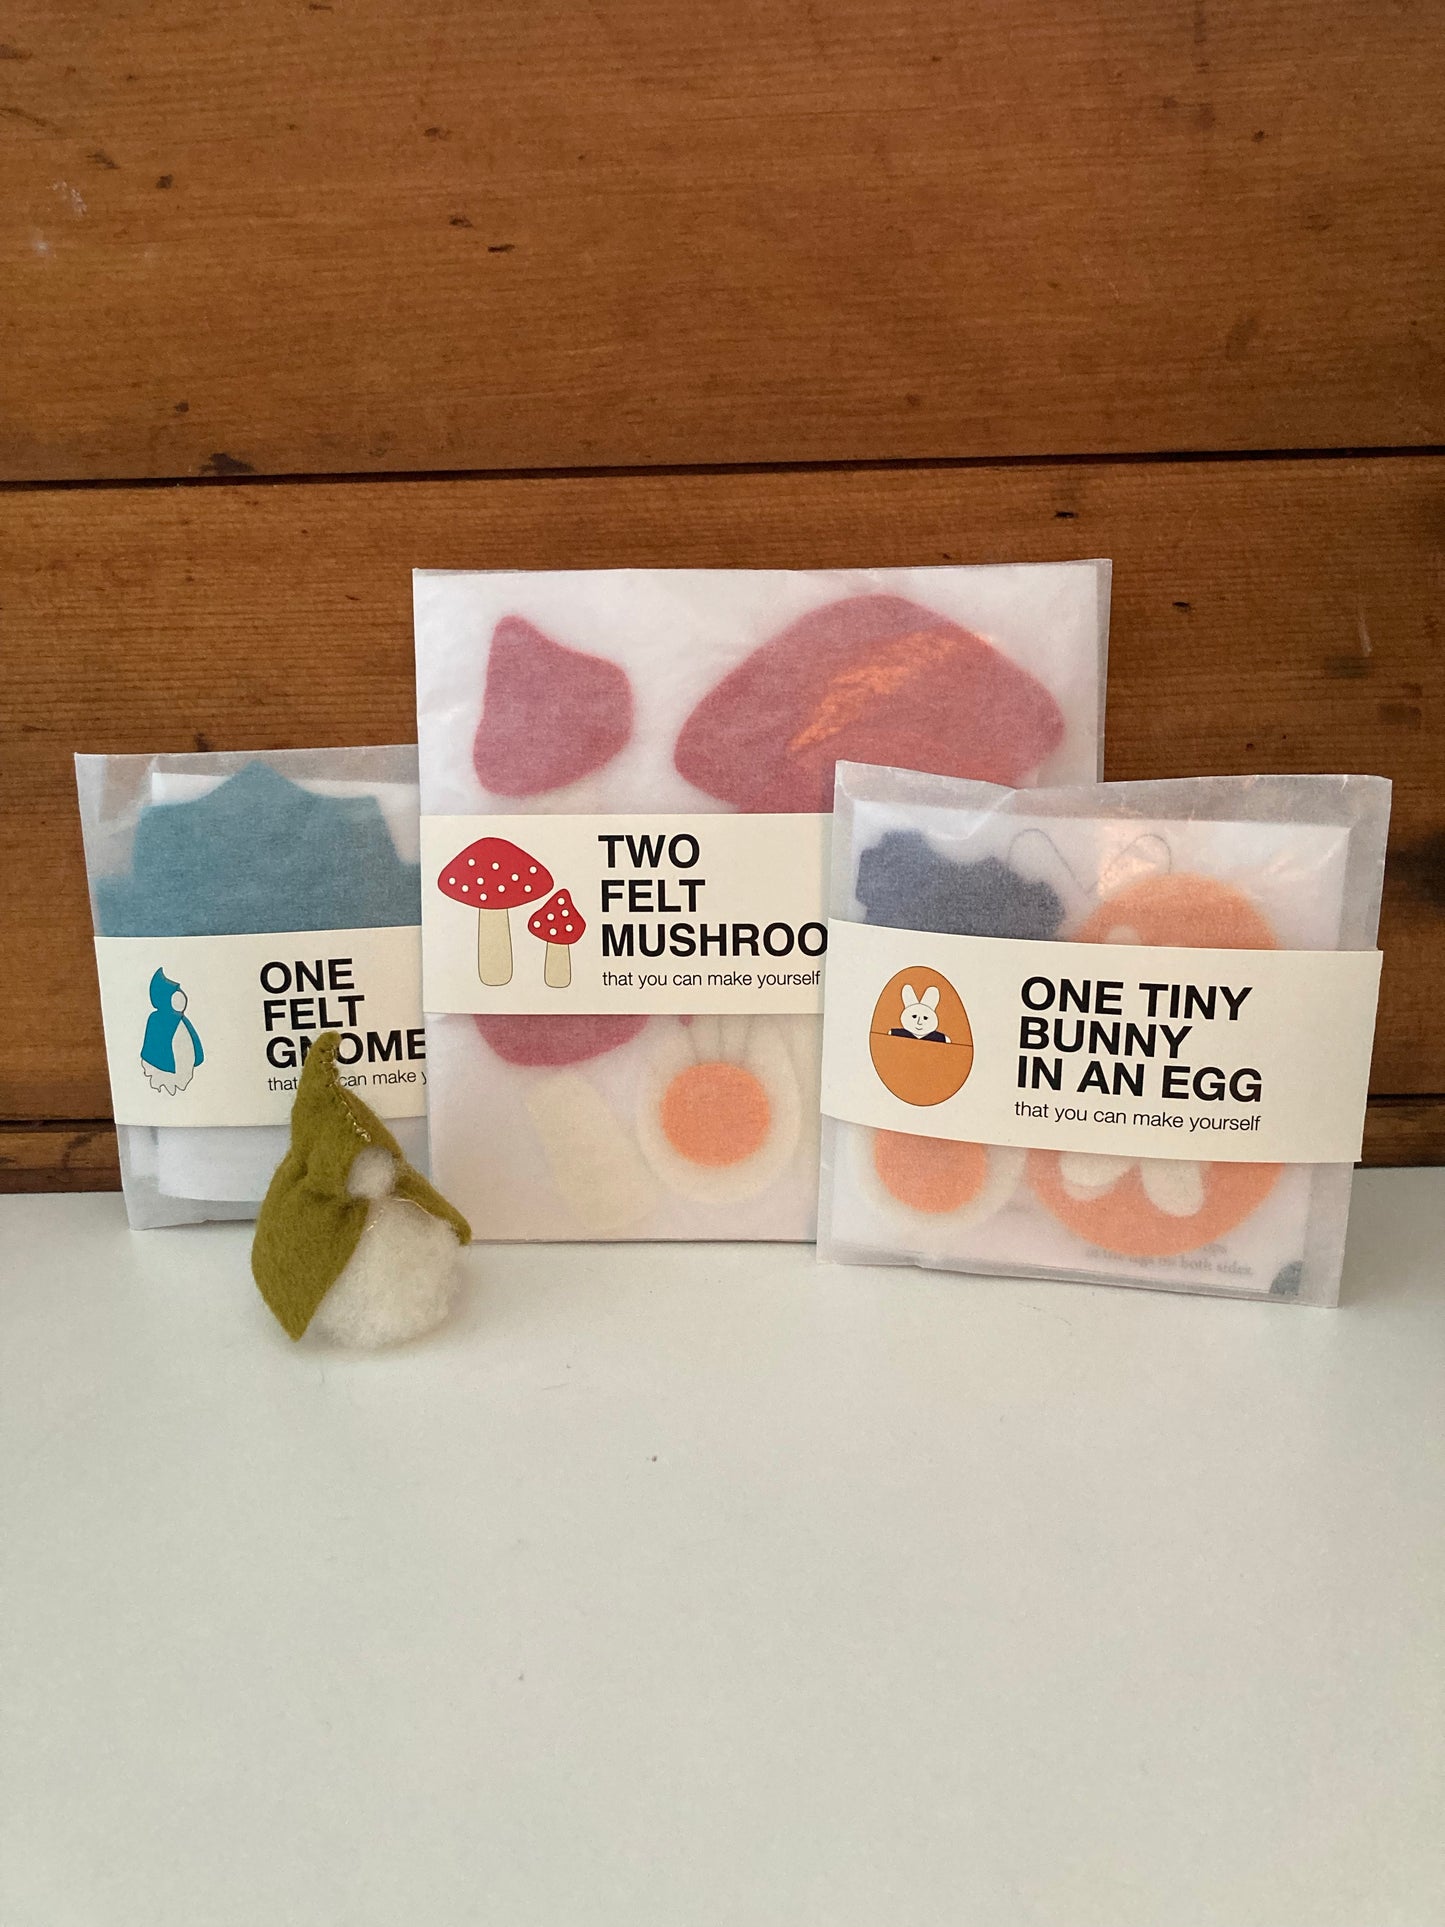 Kits d’artisanat - Felt GNOMES, CINQ en 5 couleurs !